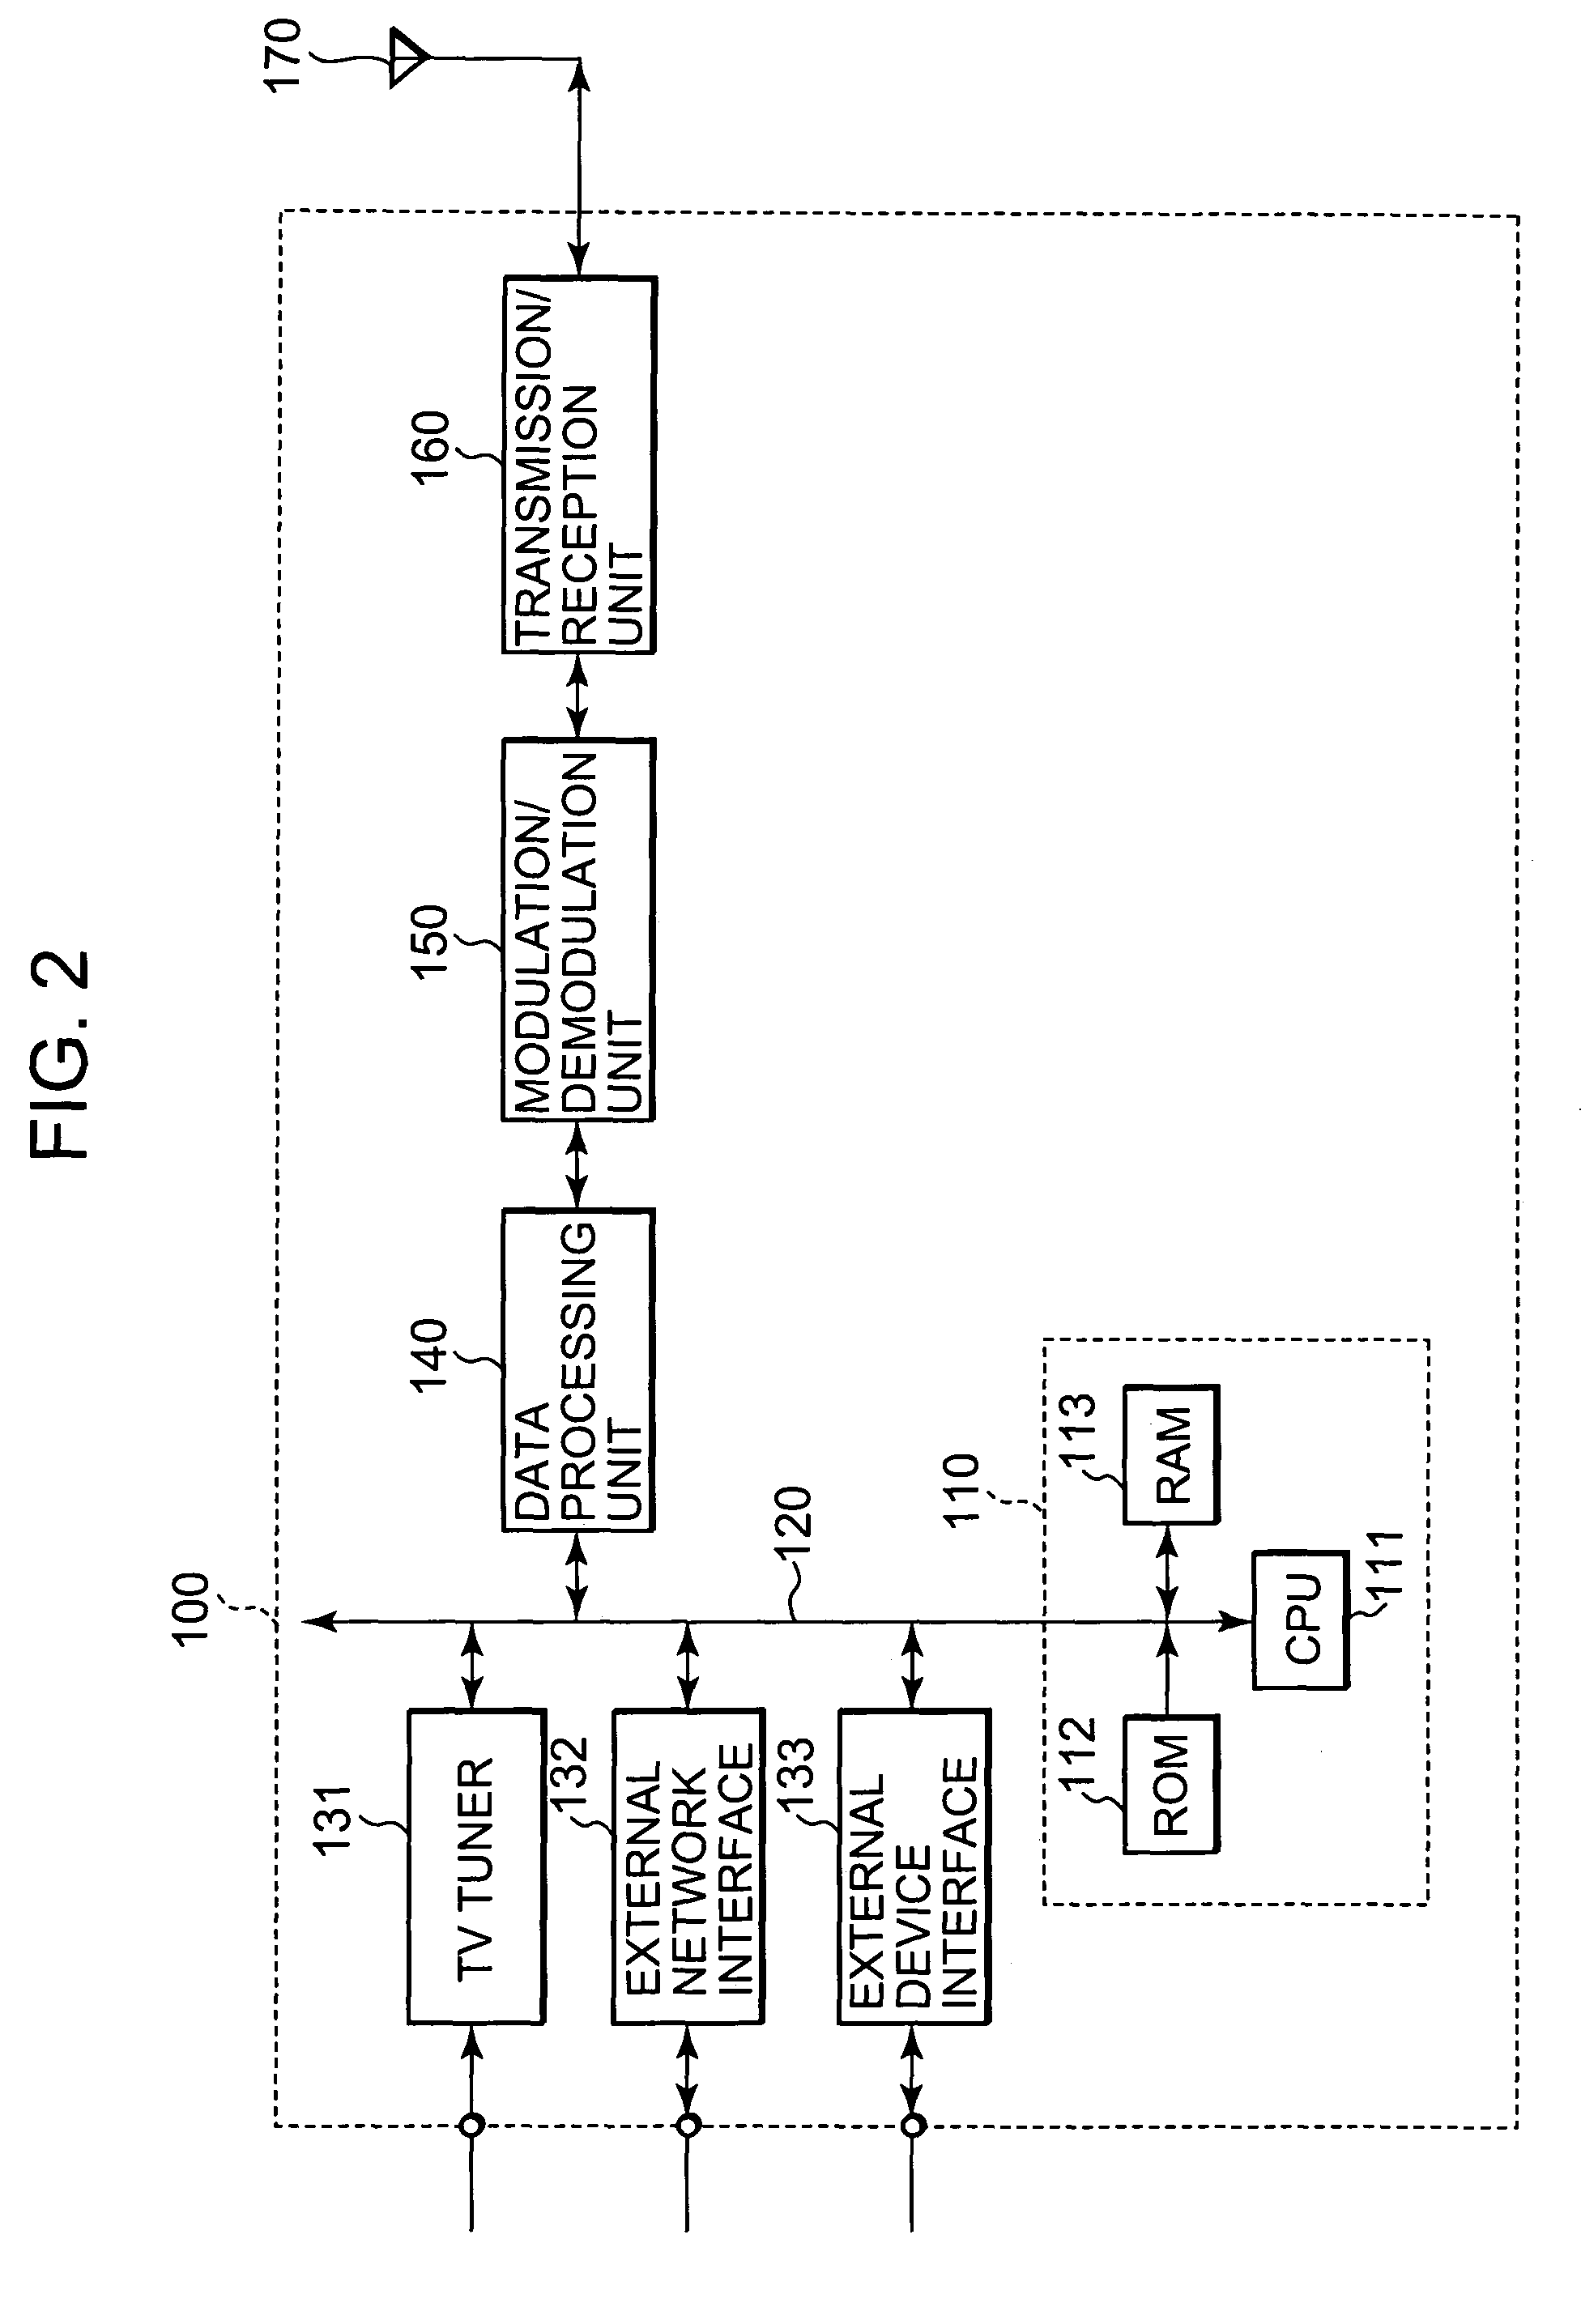 Base apparatus, monitor terminal and repeater apparatus